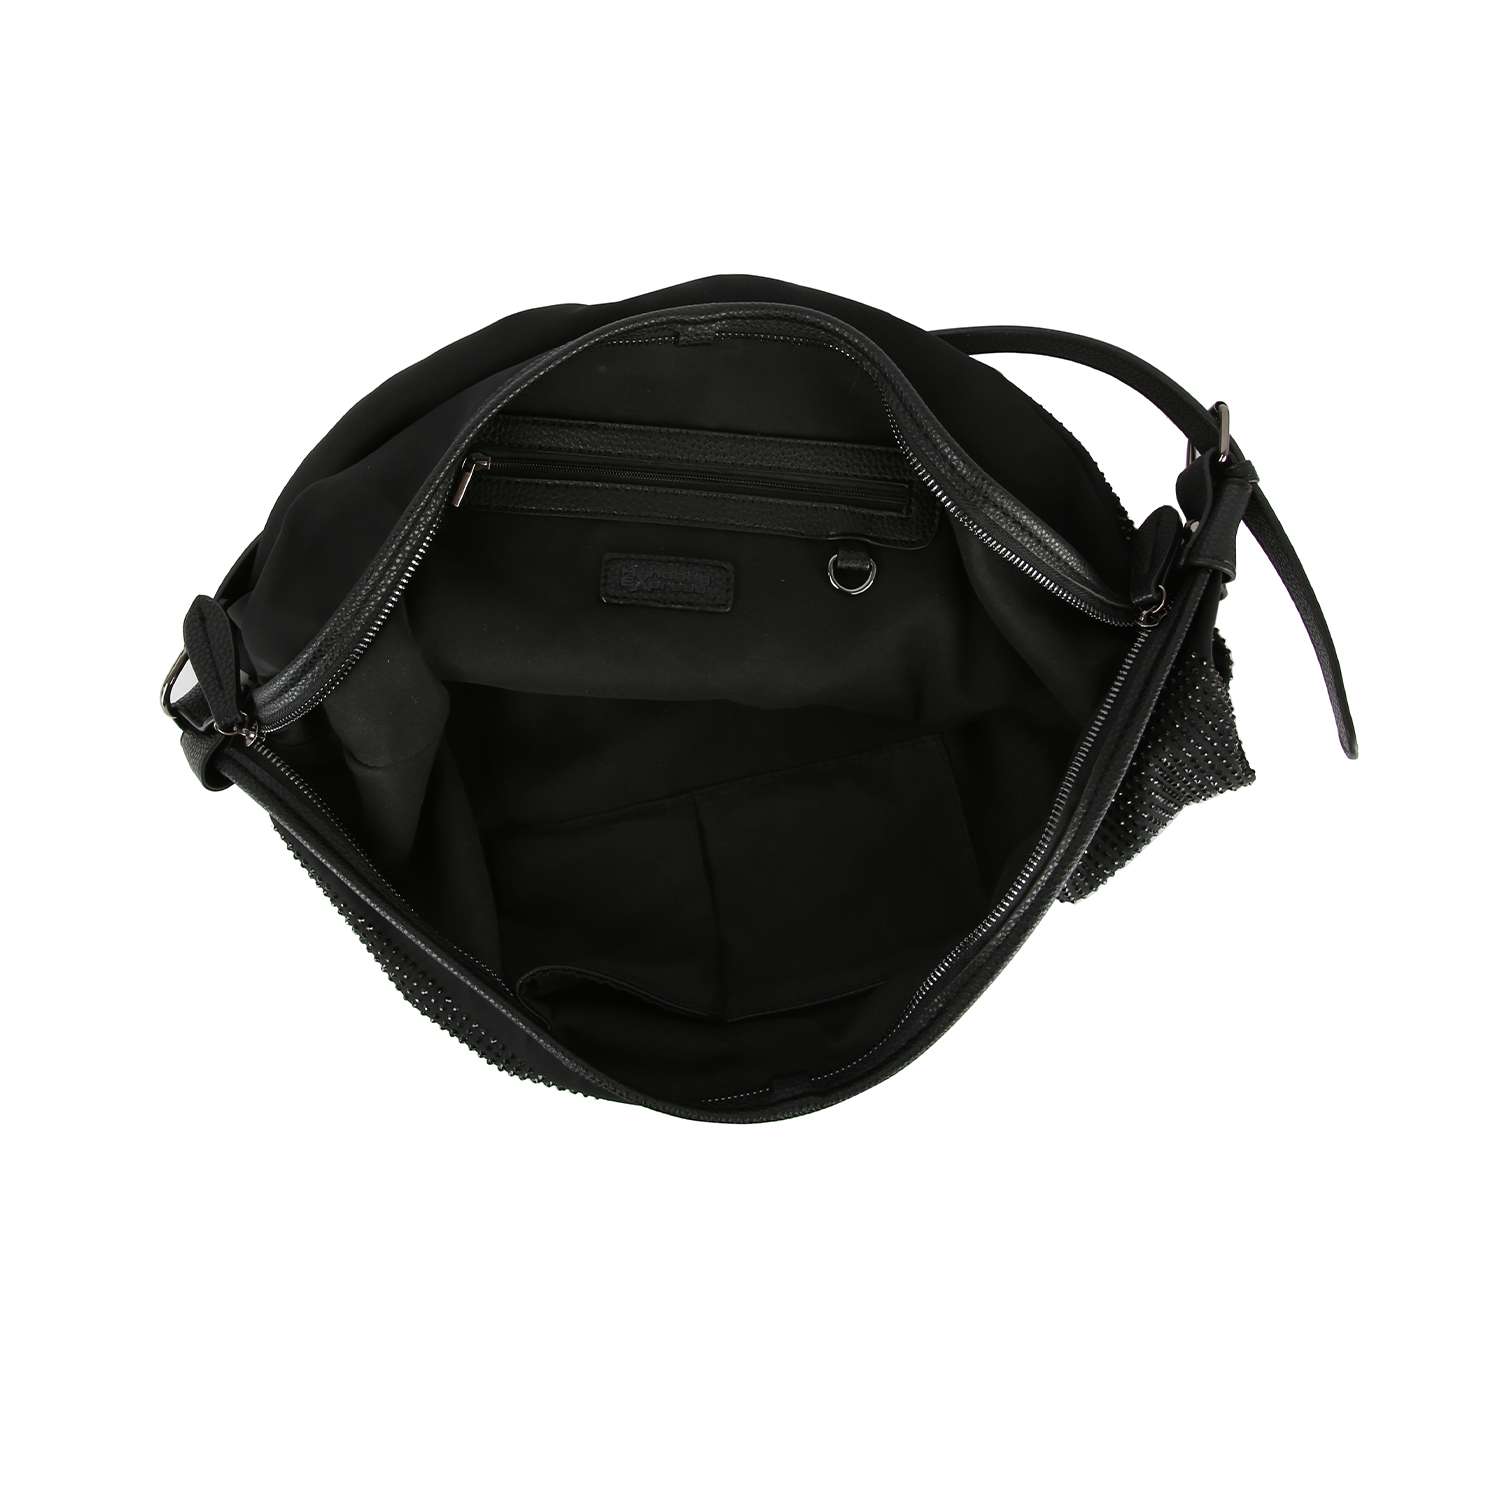 Dazzling Rhinestone Hobo Handbag: Dark Grey - Coco and lulu boutique 